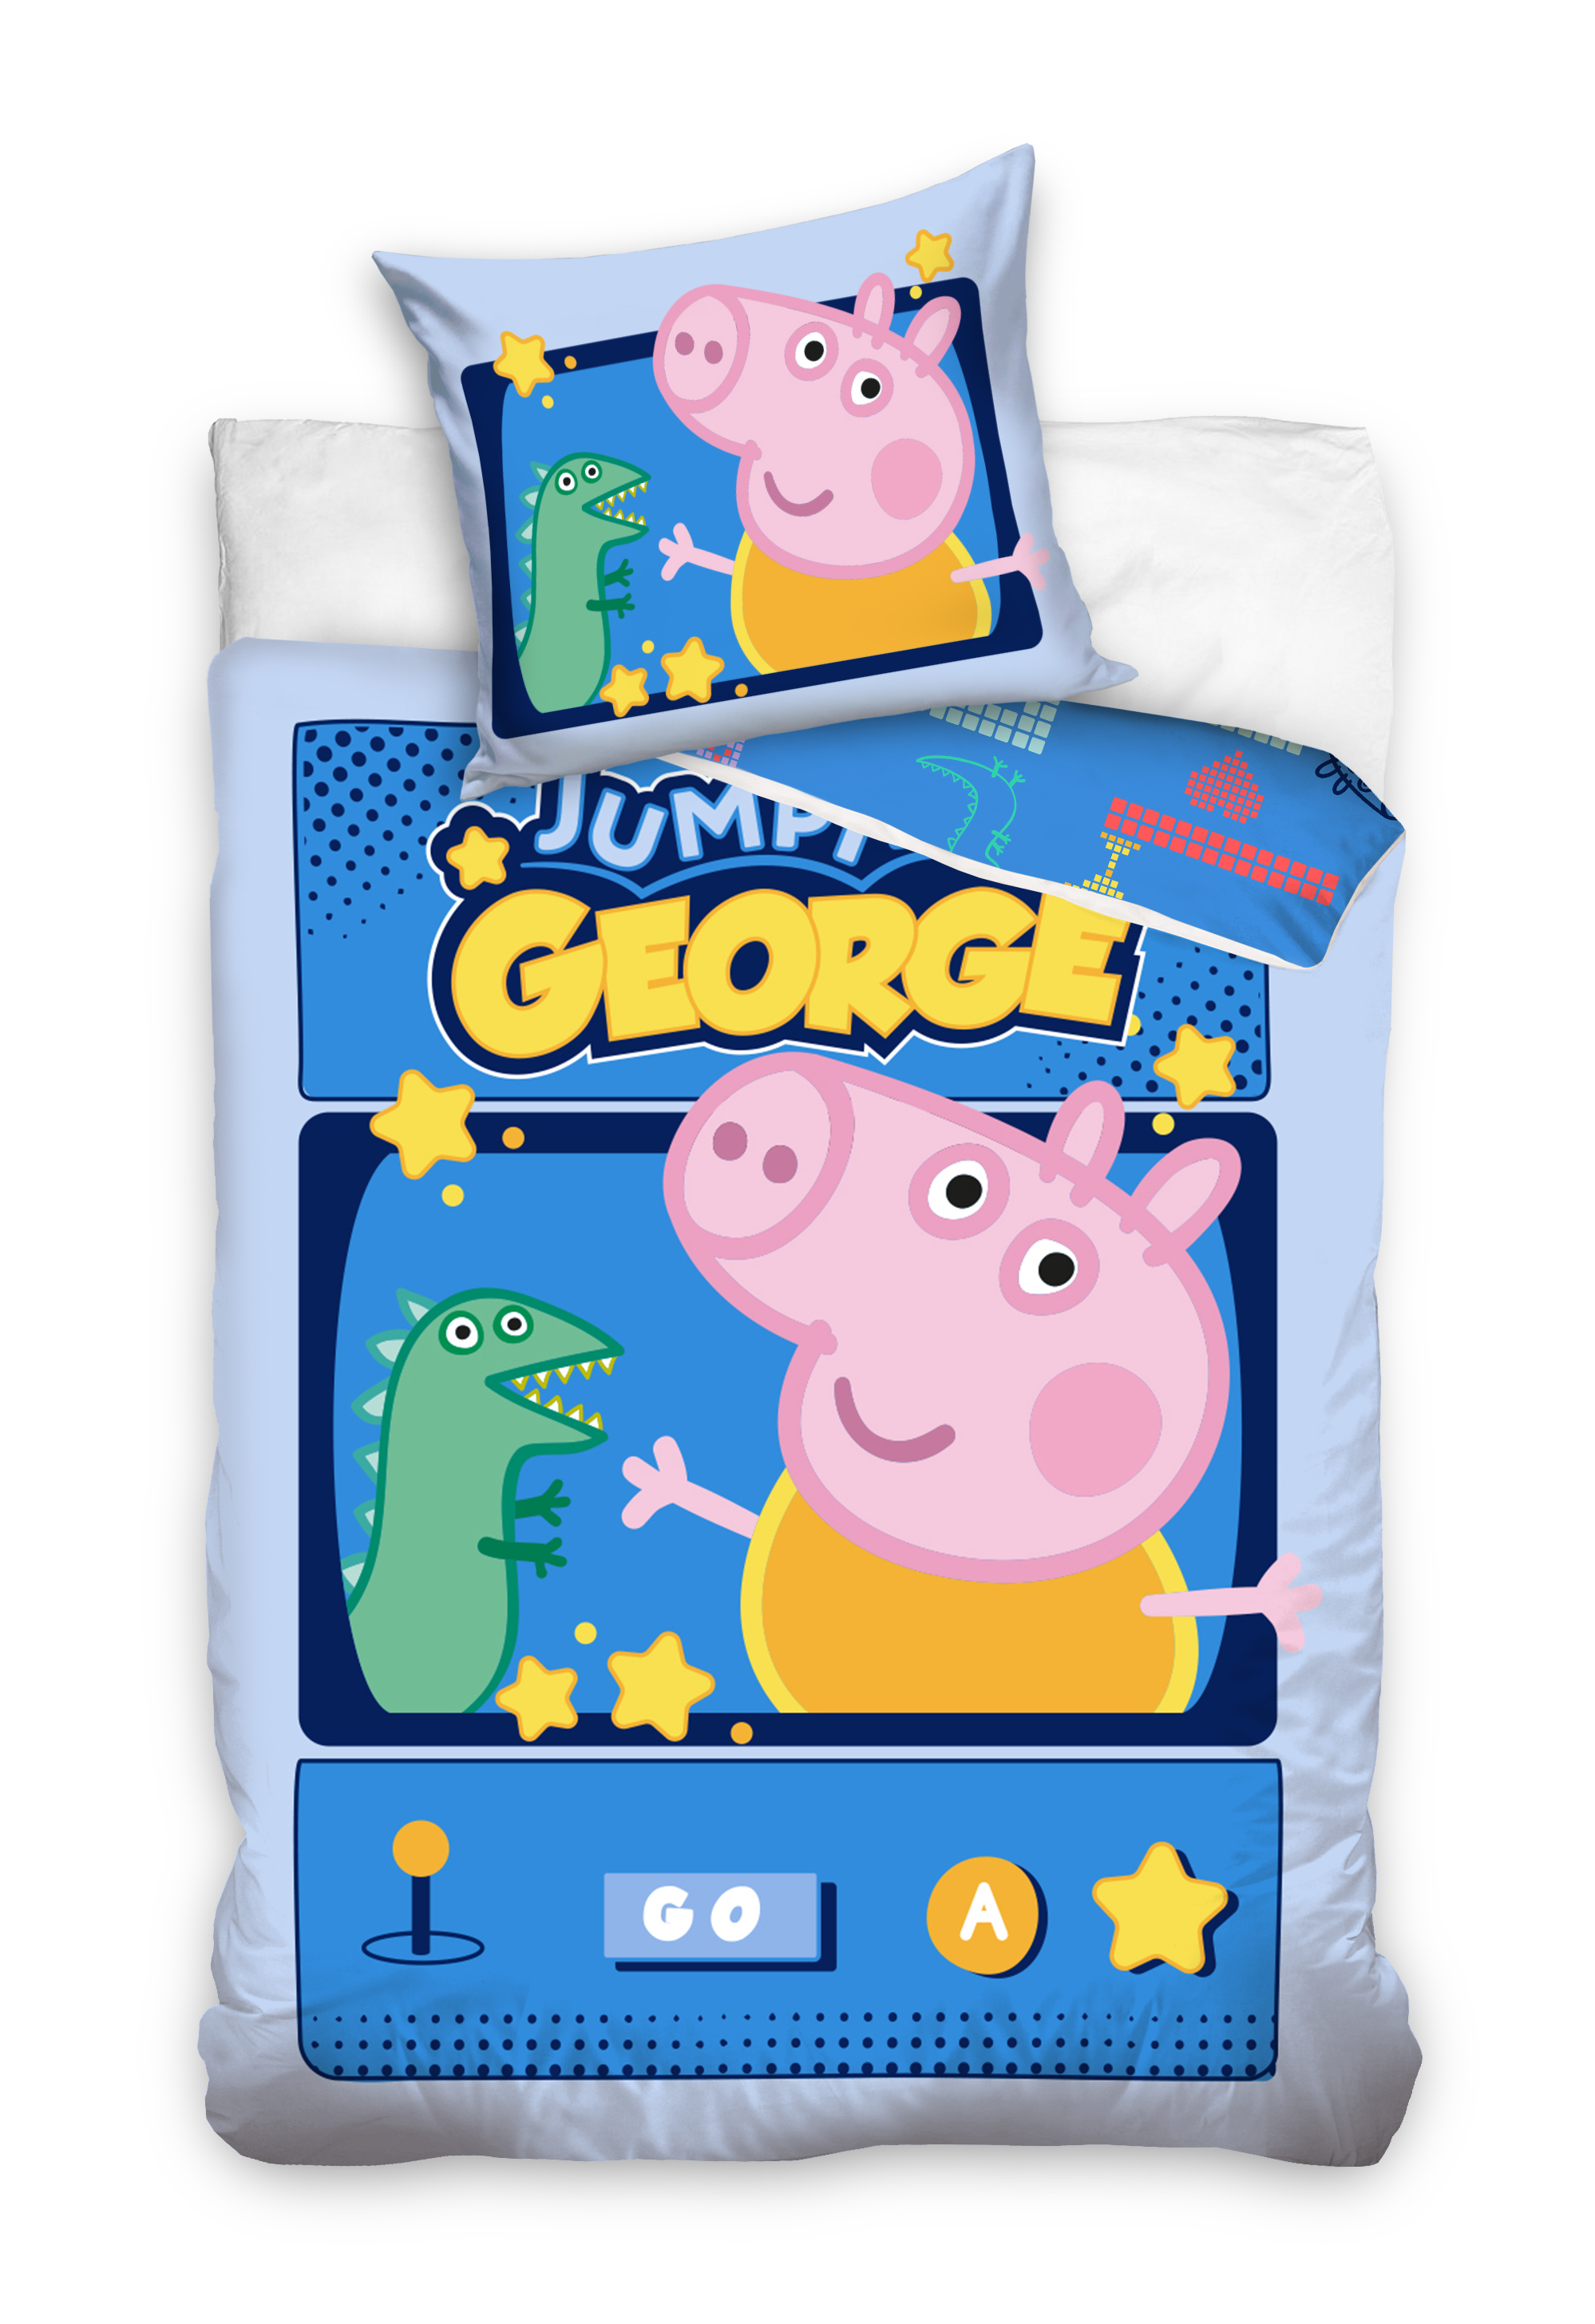 E-shop Carbotex Detské posteľné obliečky Peppa Pig - George jumping game 140 x 200 cm